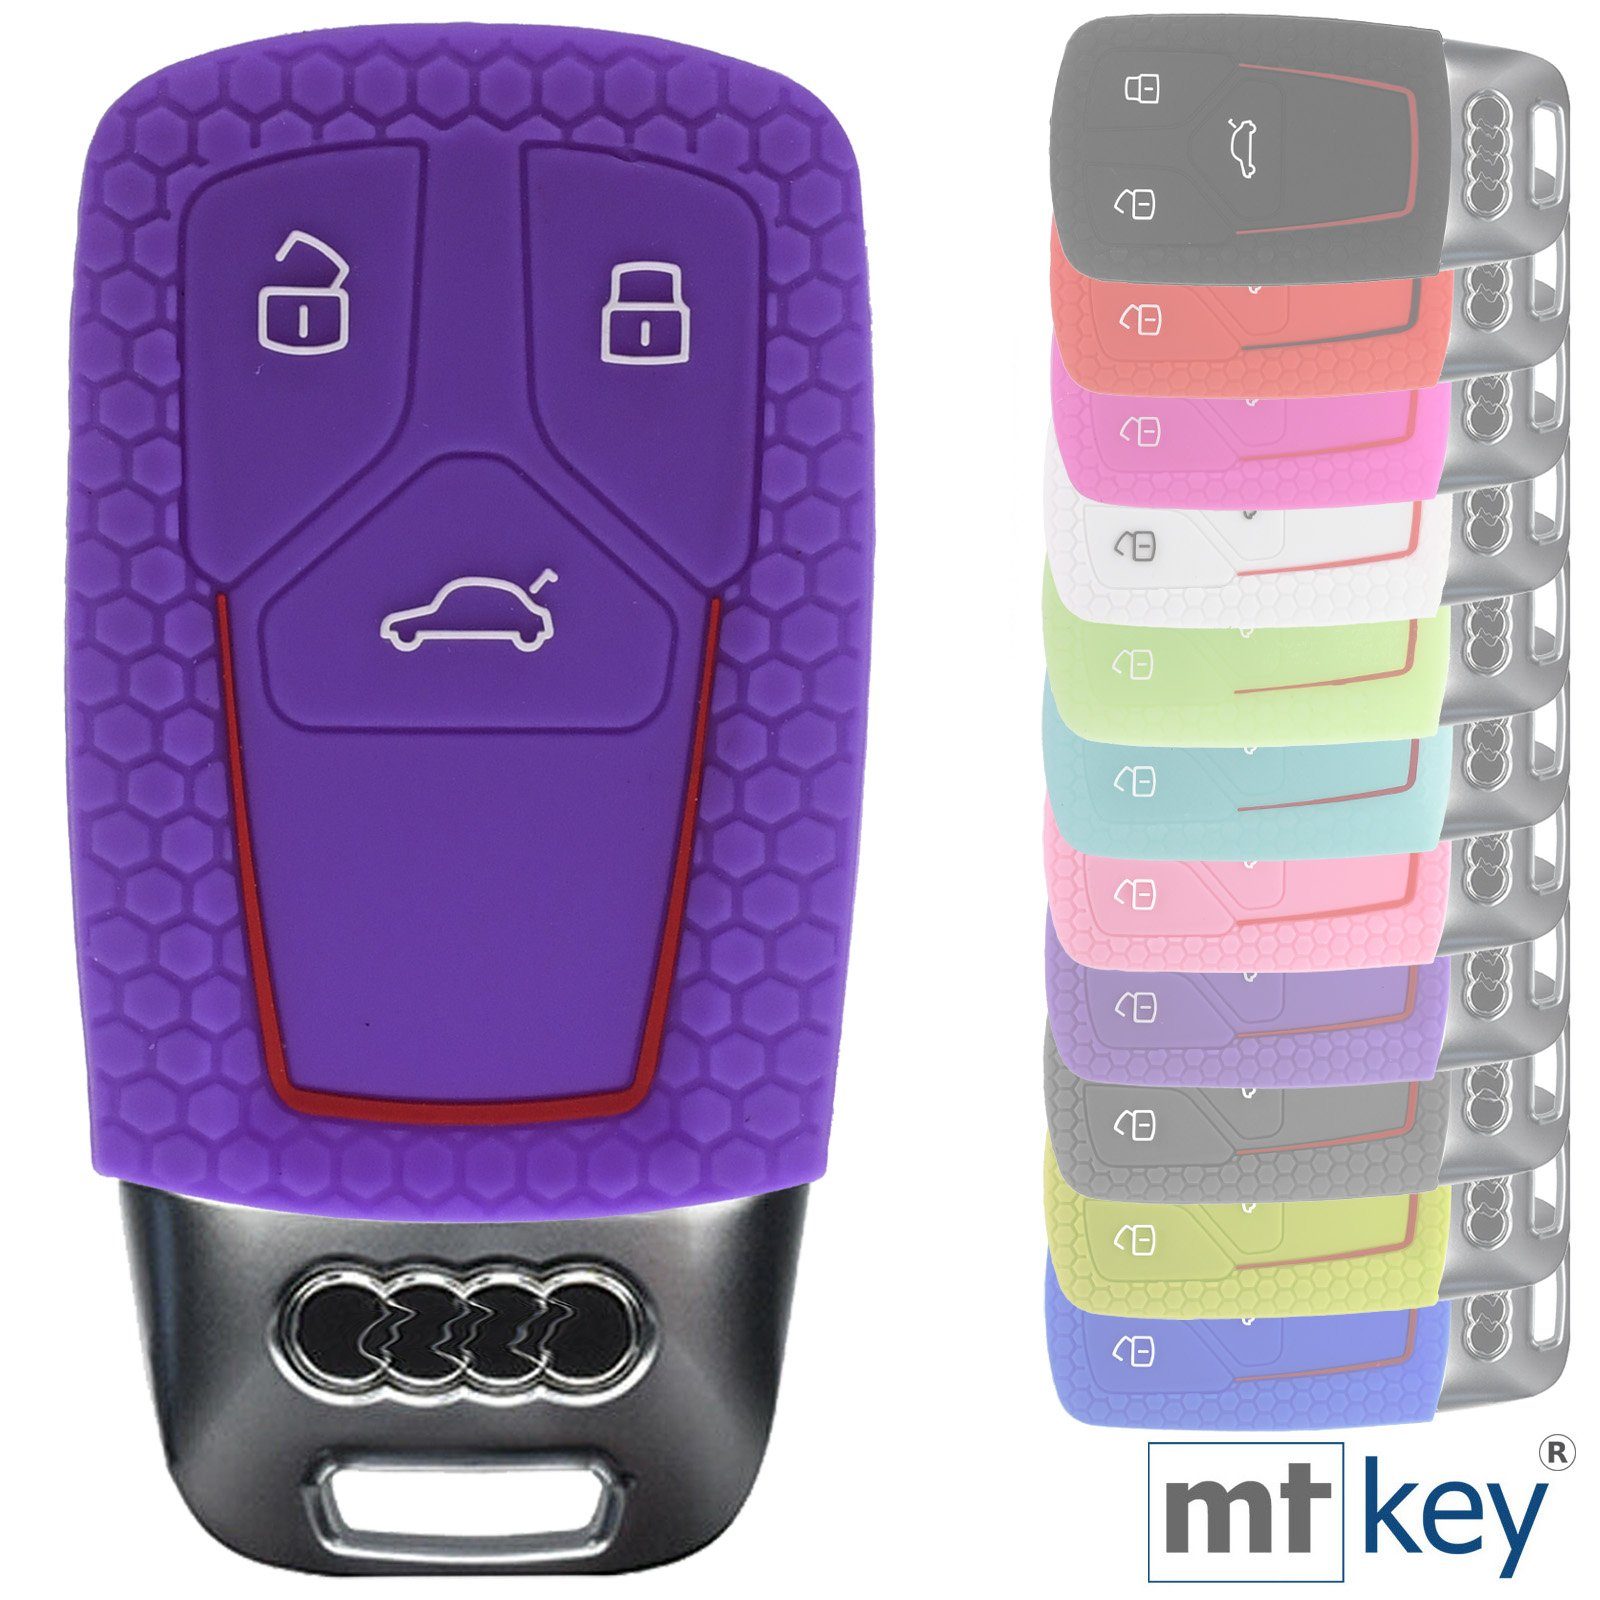 mt-key Schlüsseltasche Autoschlüssel Softcase Silikon Schutzhülle im Wabe Design Lila, für Audi A4 A5 A6 A7 TT Q2 Q5 Q7 A8 Q8 3 Tasten KEYLESS SMARTKEY